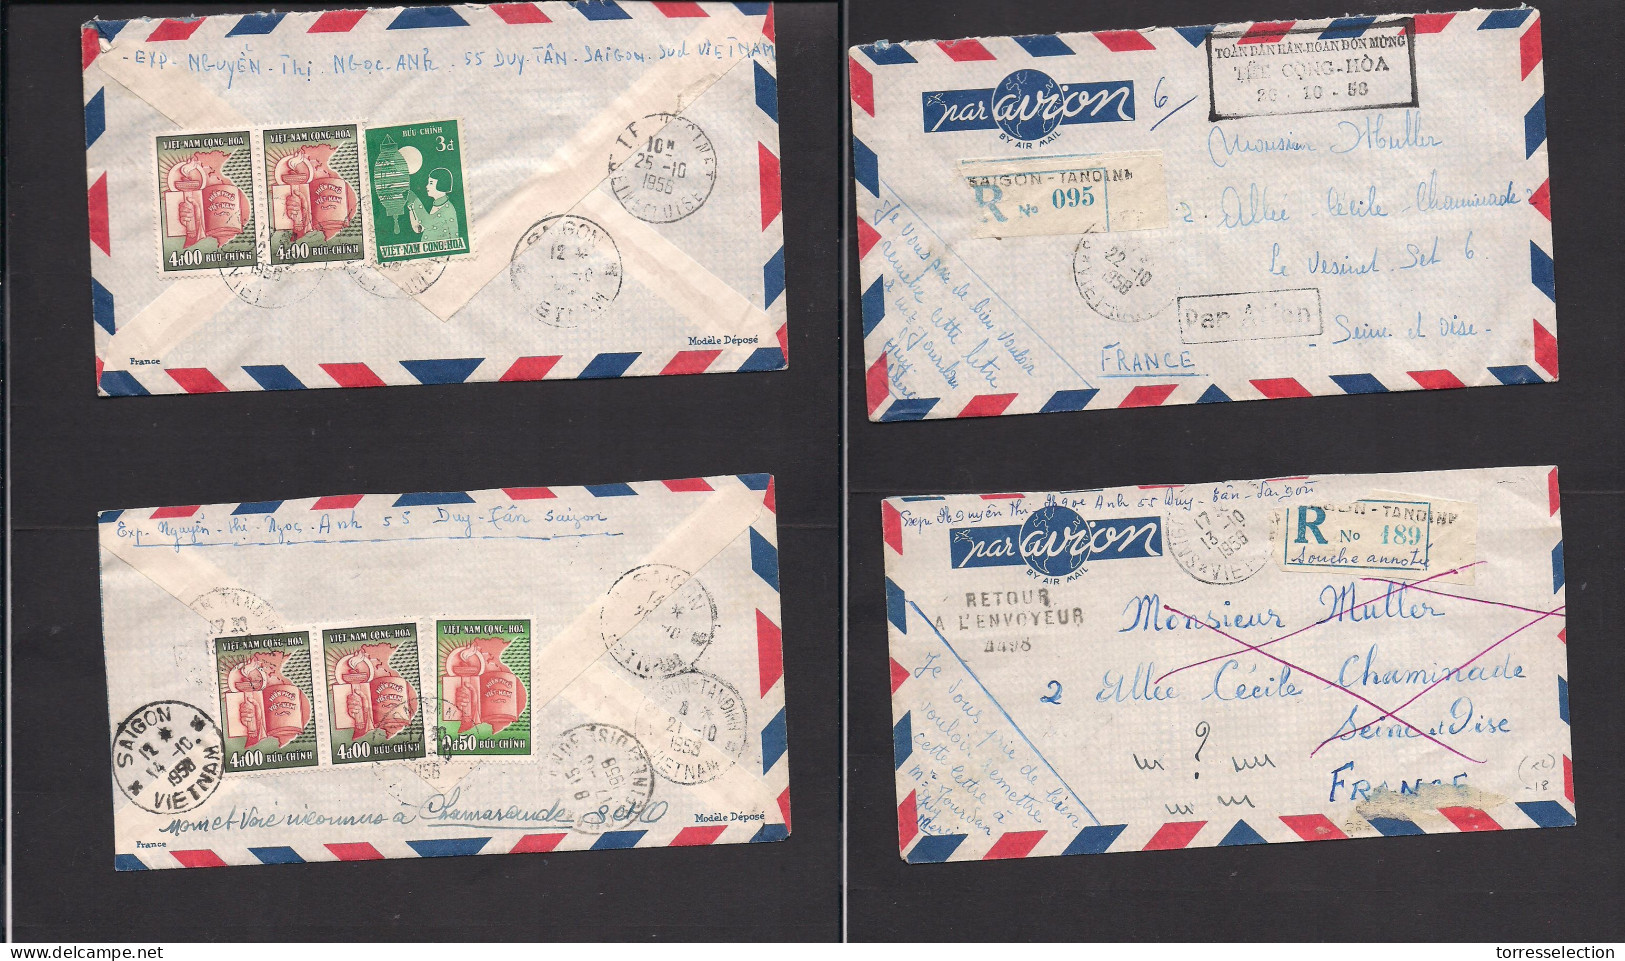 INDOCHINA. 1956. Vietnam. Saignon - France. 2 Airmails Reverse Multifkd Envelope. Fine Pair. XSALE. - Asia (Other)